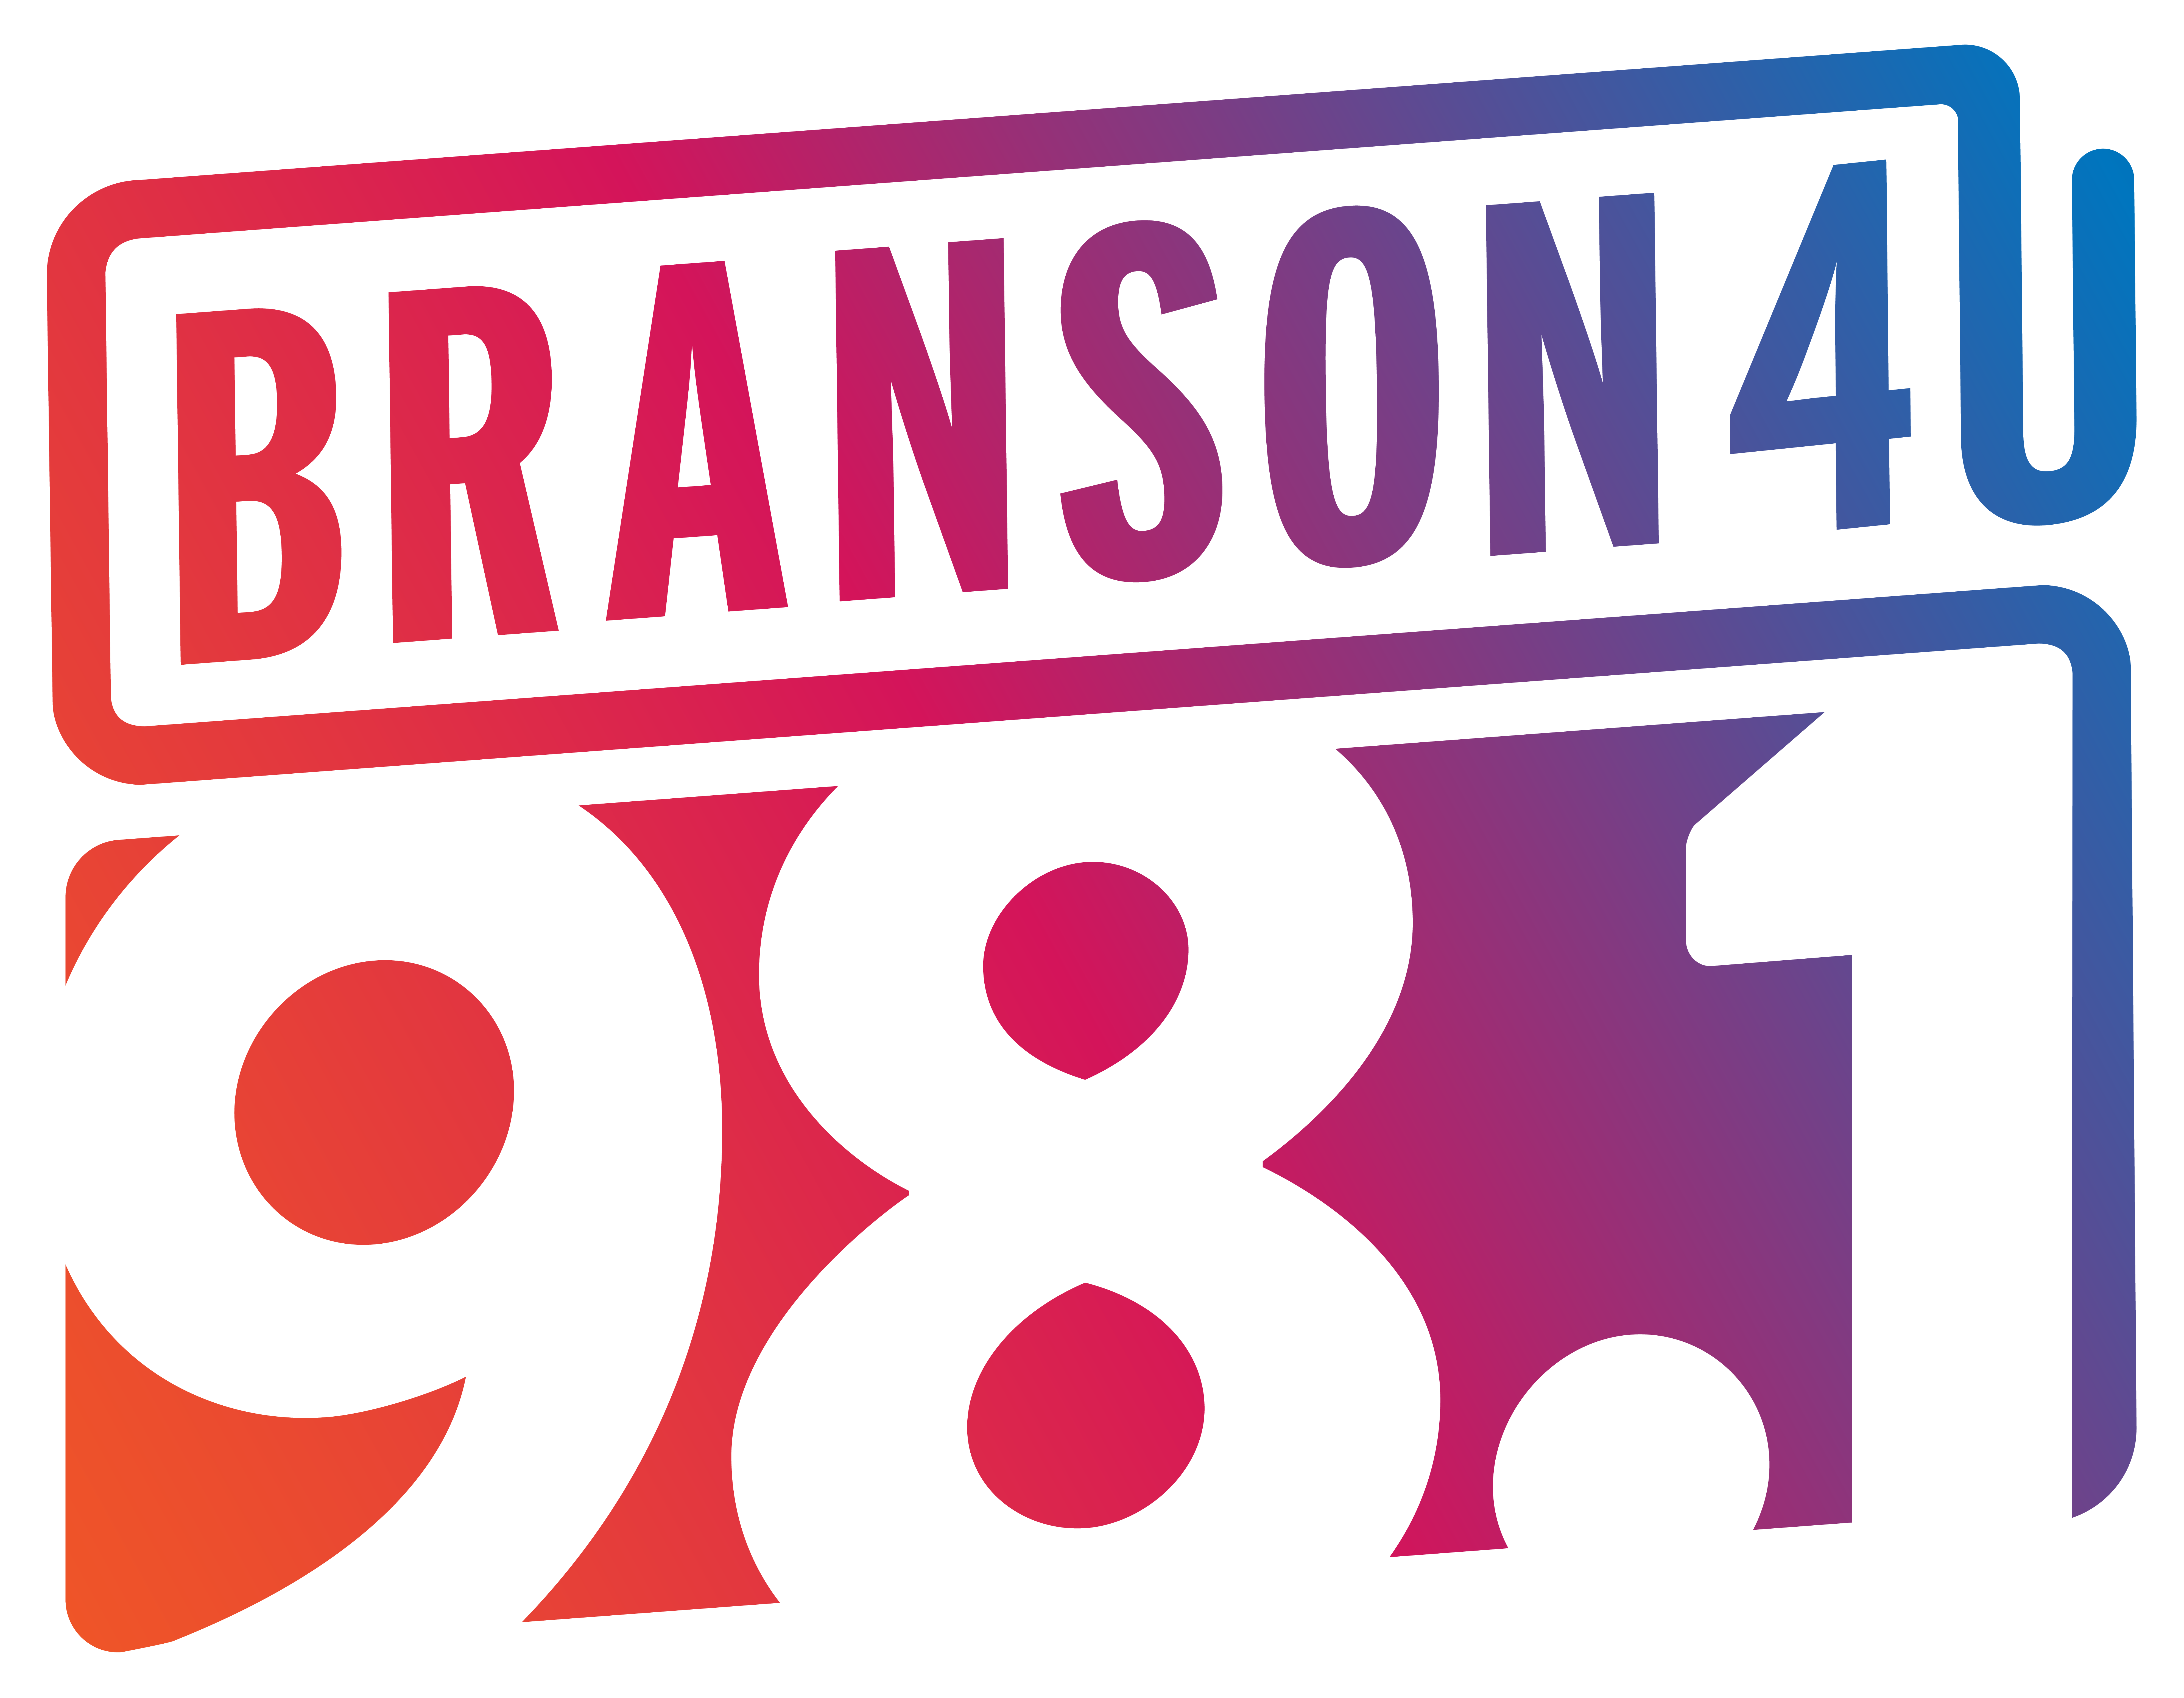 Branson4u 98.1